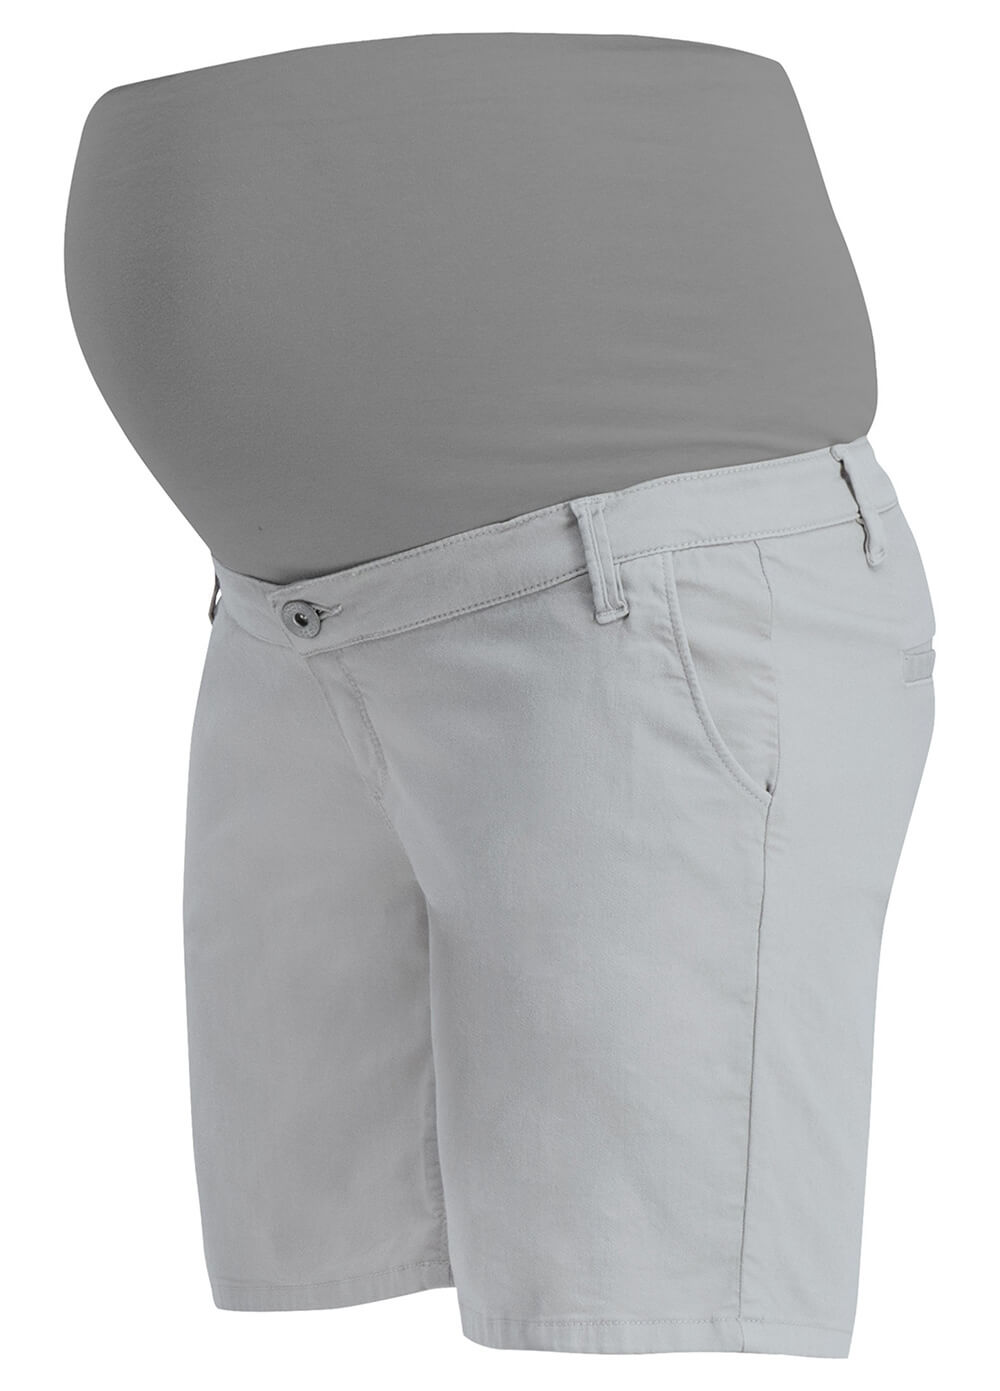 Brenda Maternity Shorts by Noppies